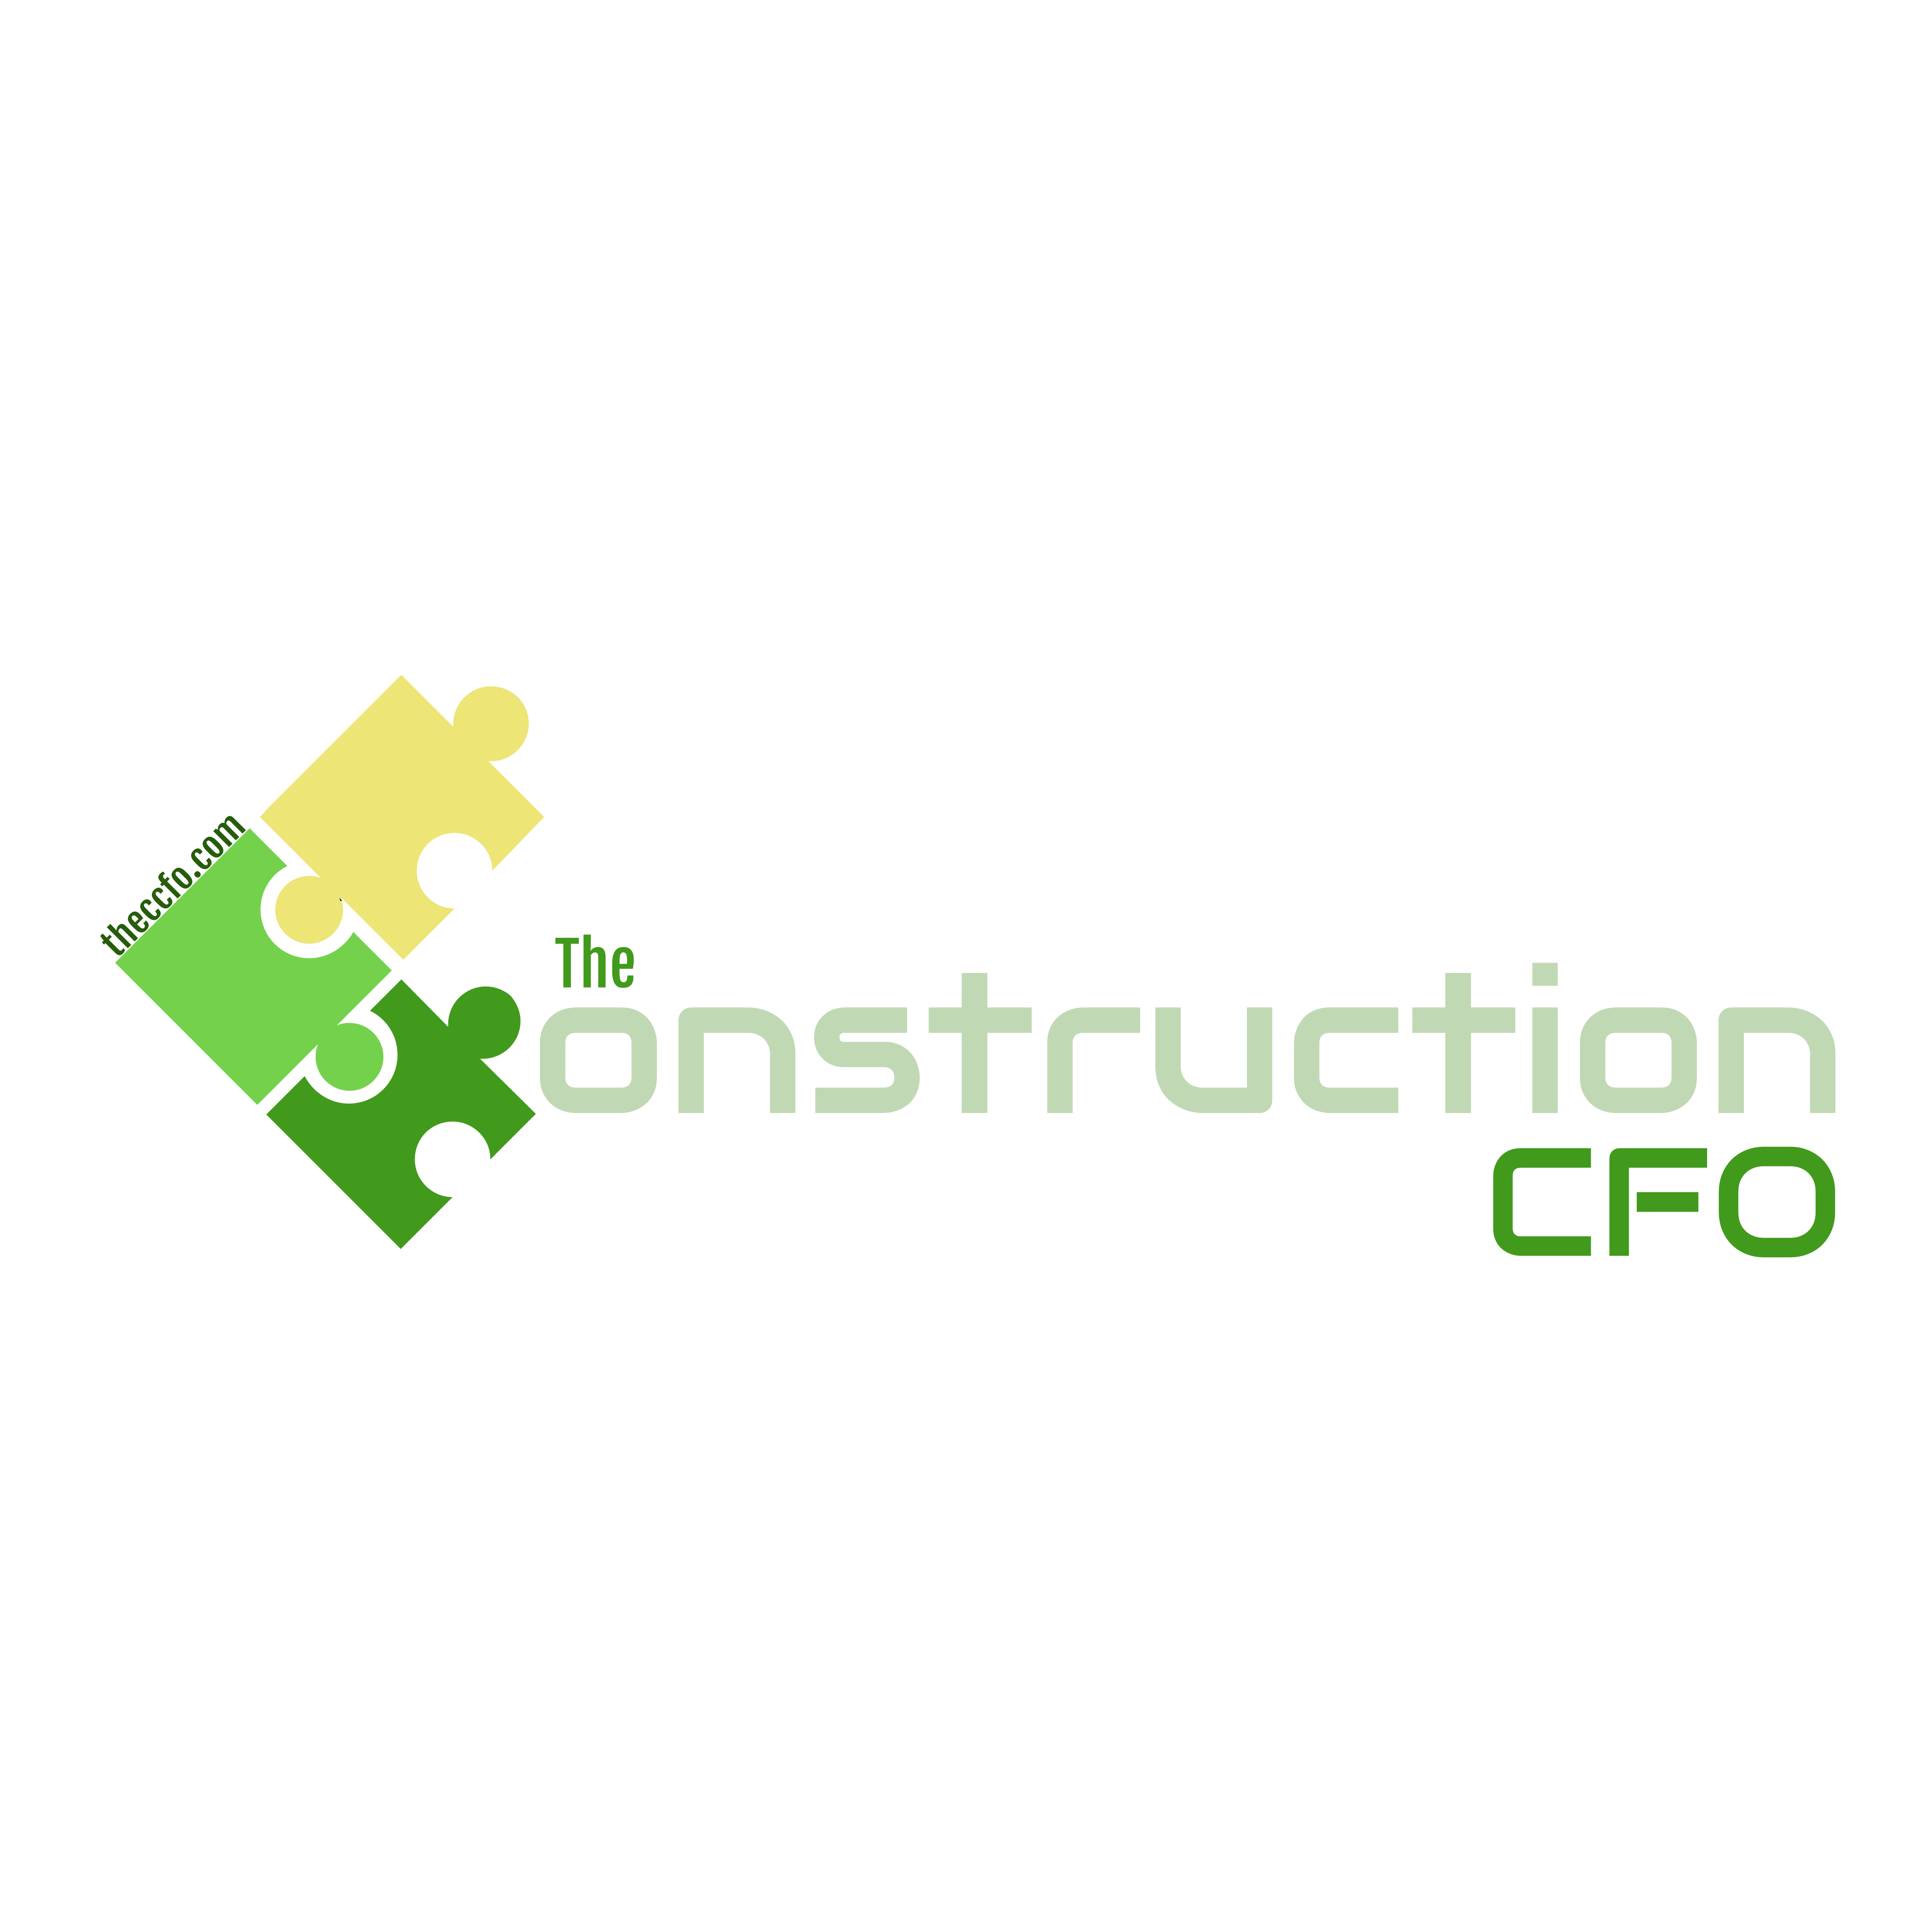 The Construction CFO